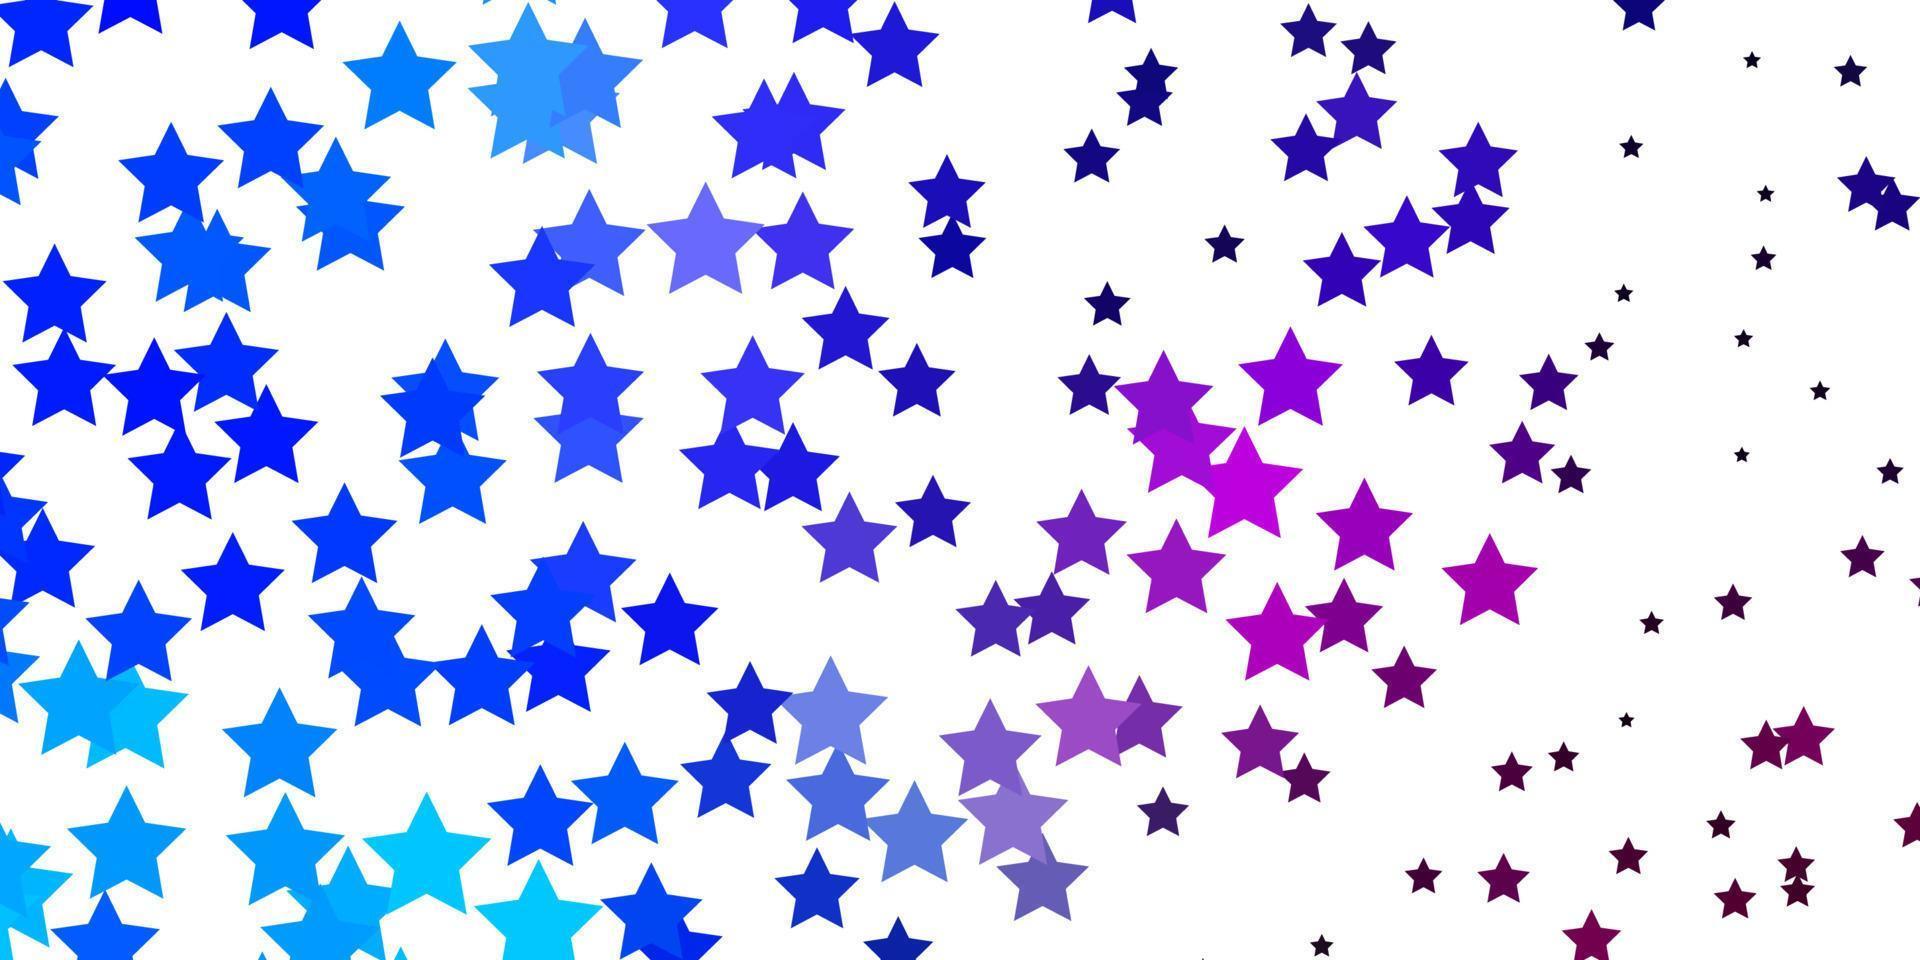 plantilla de vector de color rosa oscuro, azul con estrellas de neón.